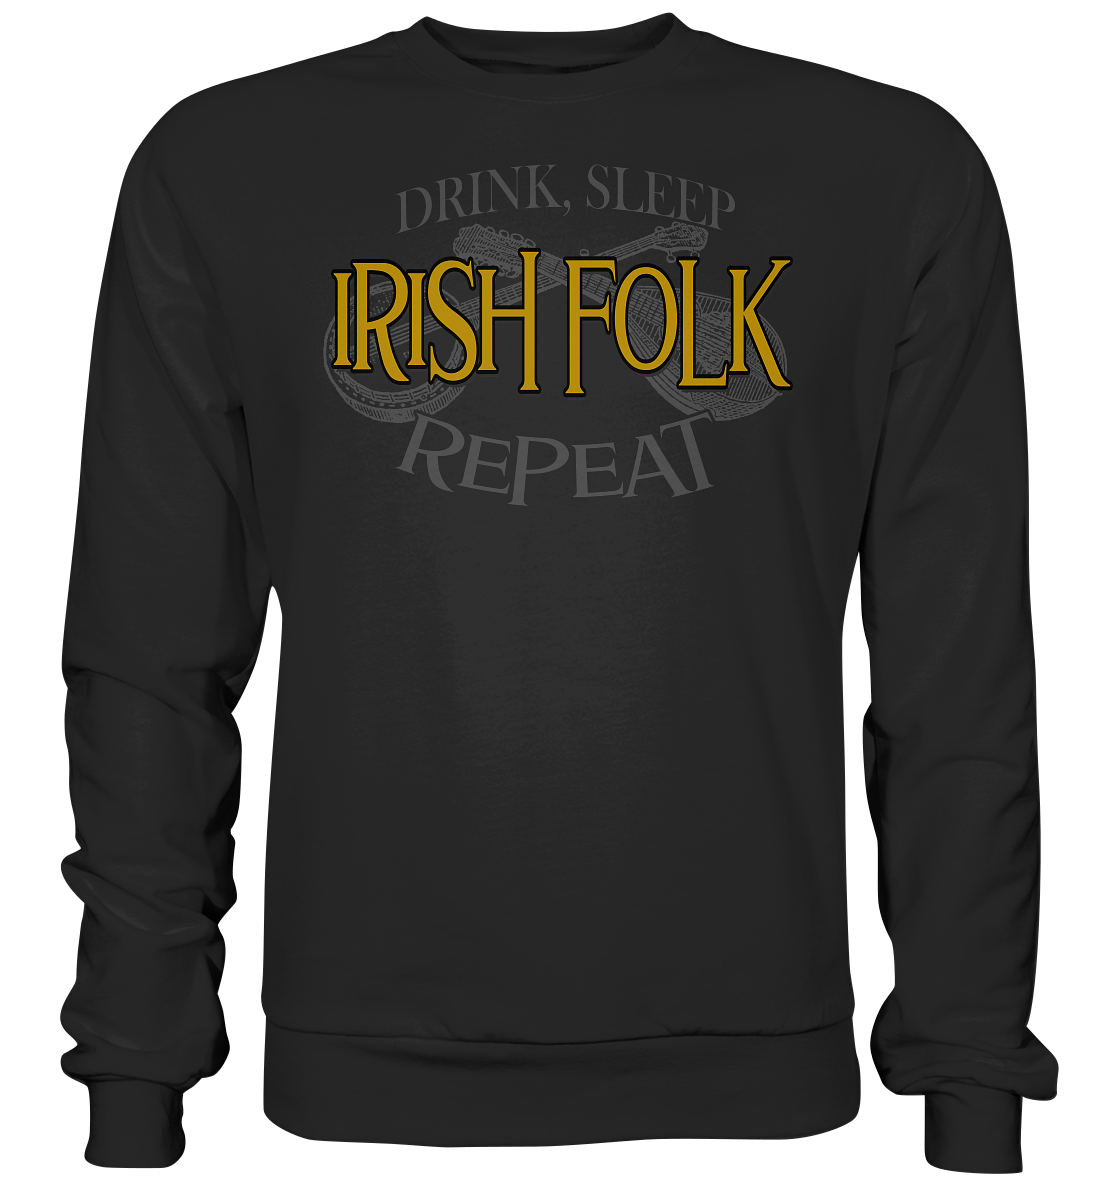 Drink, Sleep "Irish Folk" Repeat - Basic Sweatshirt